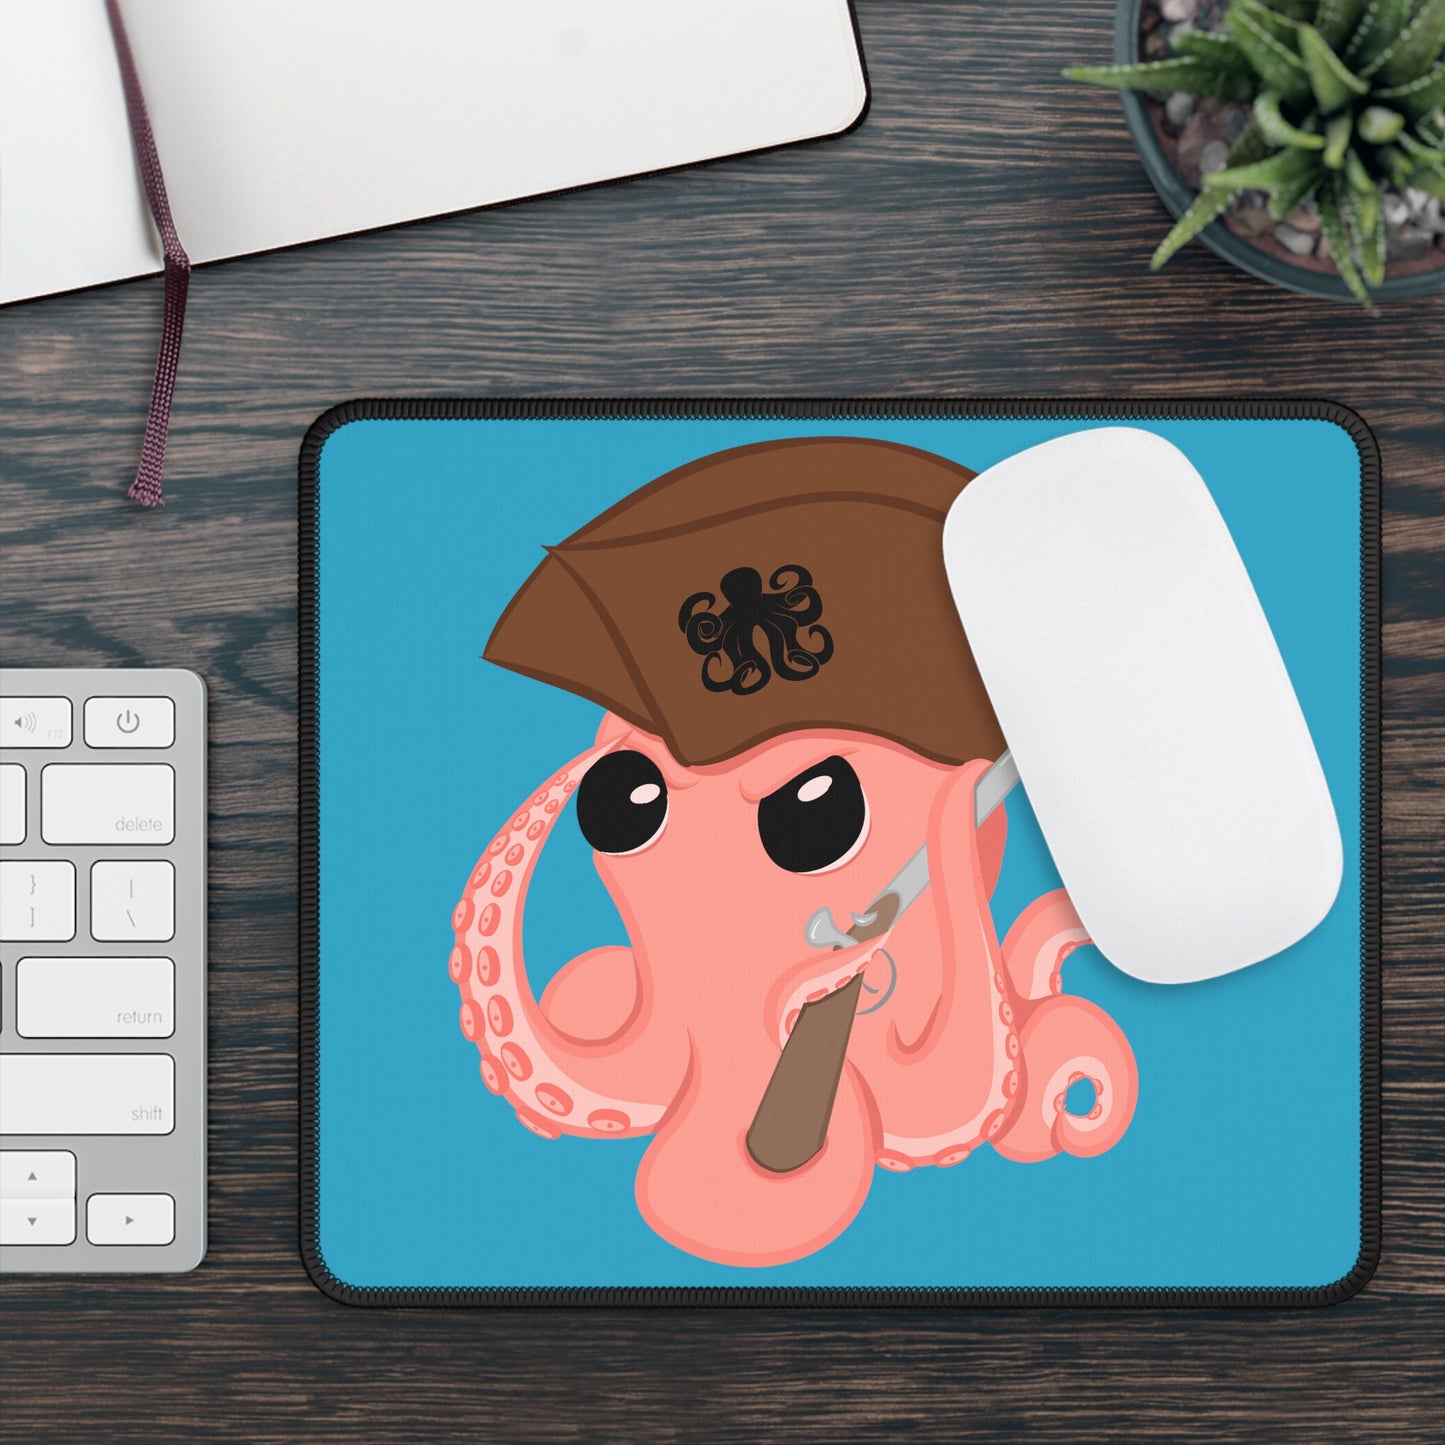 Original Octopus Revolution Mascot Mousepad